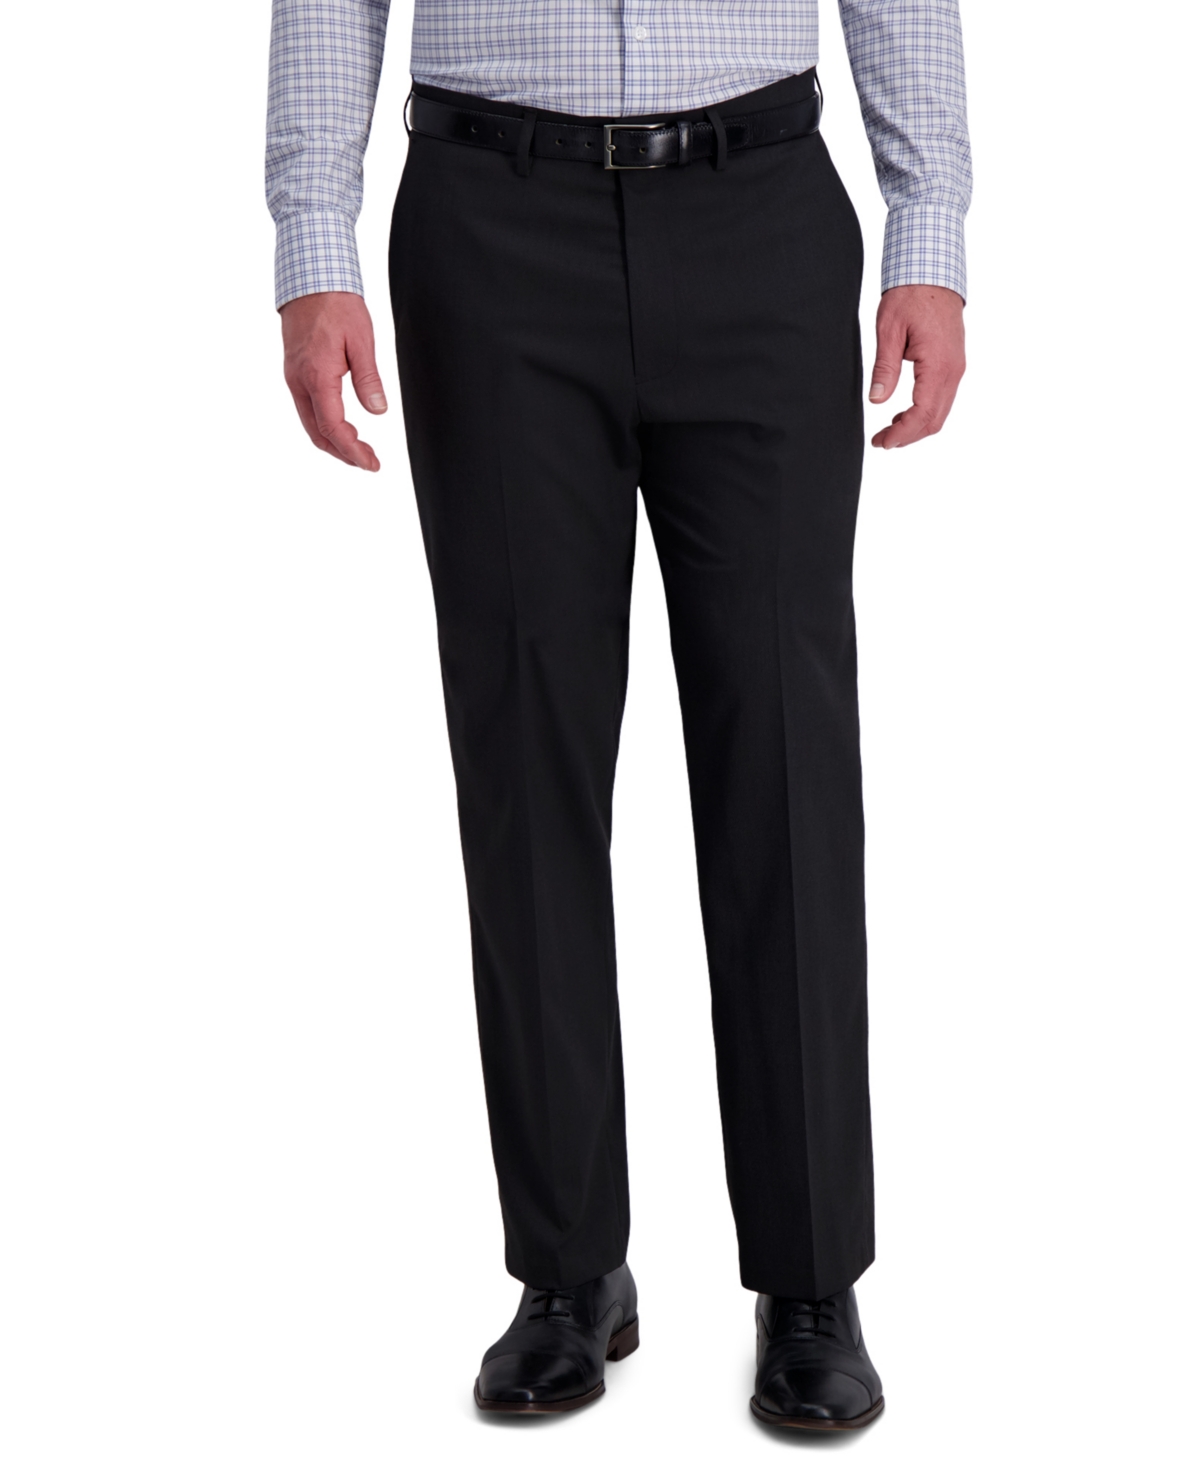 J.m. Haggar Men's 4-Way Stretch Diamond-Weave Classic Fit Flat Front Performance Dress Pant - Charcoal